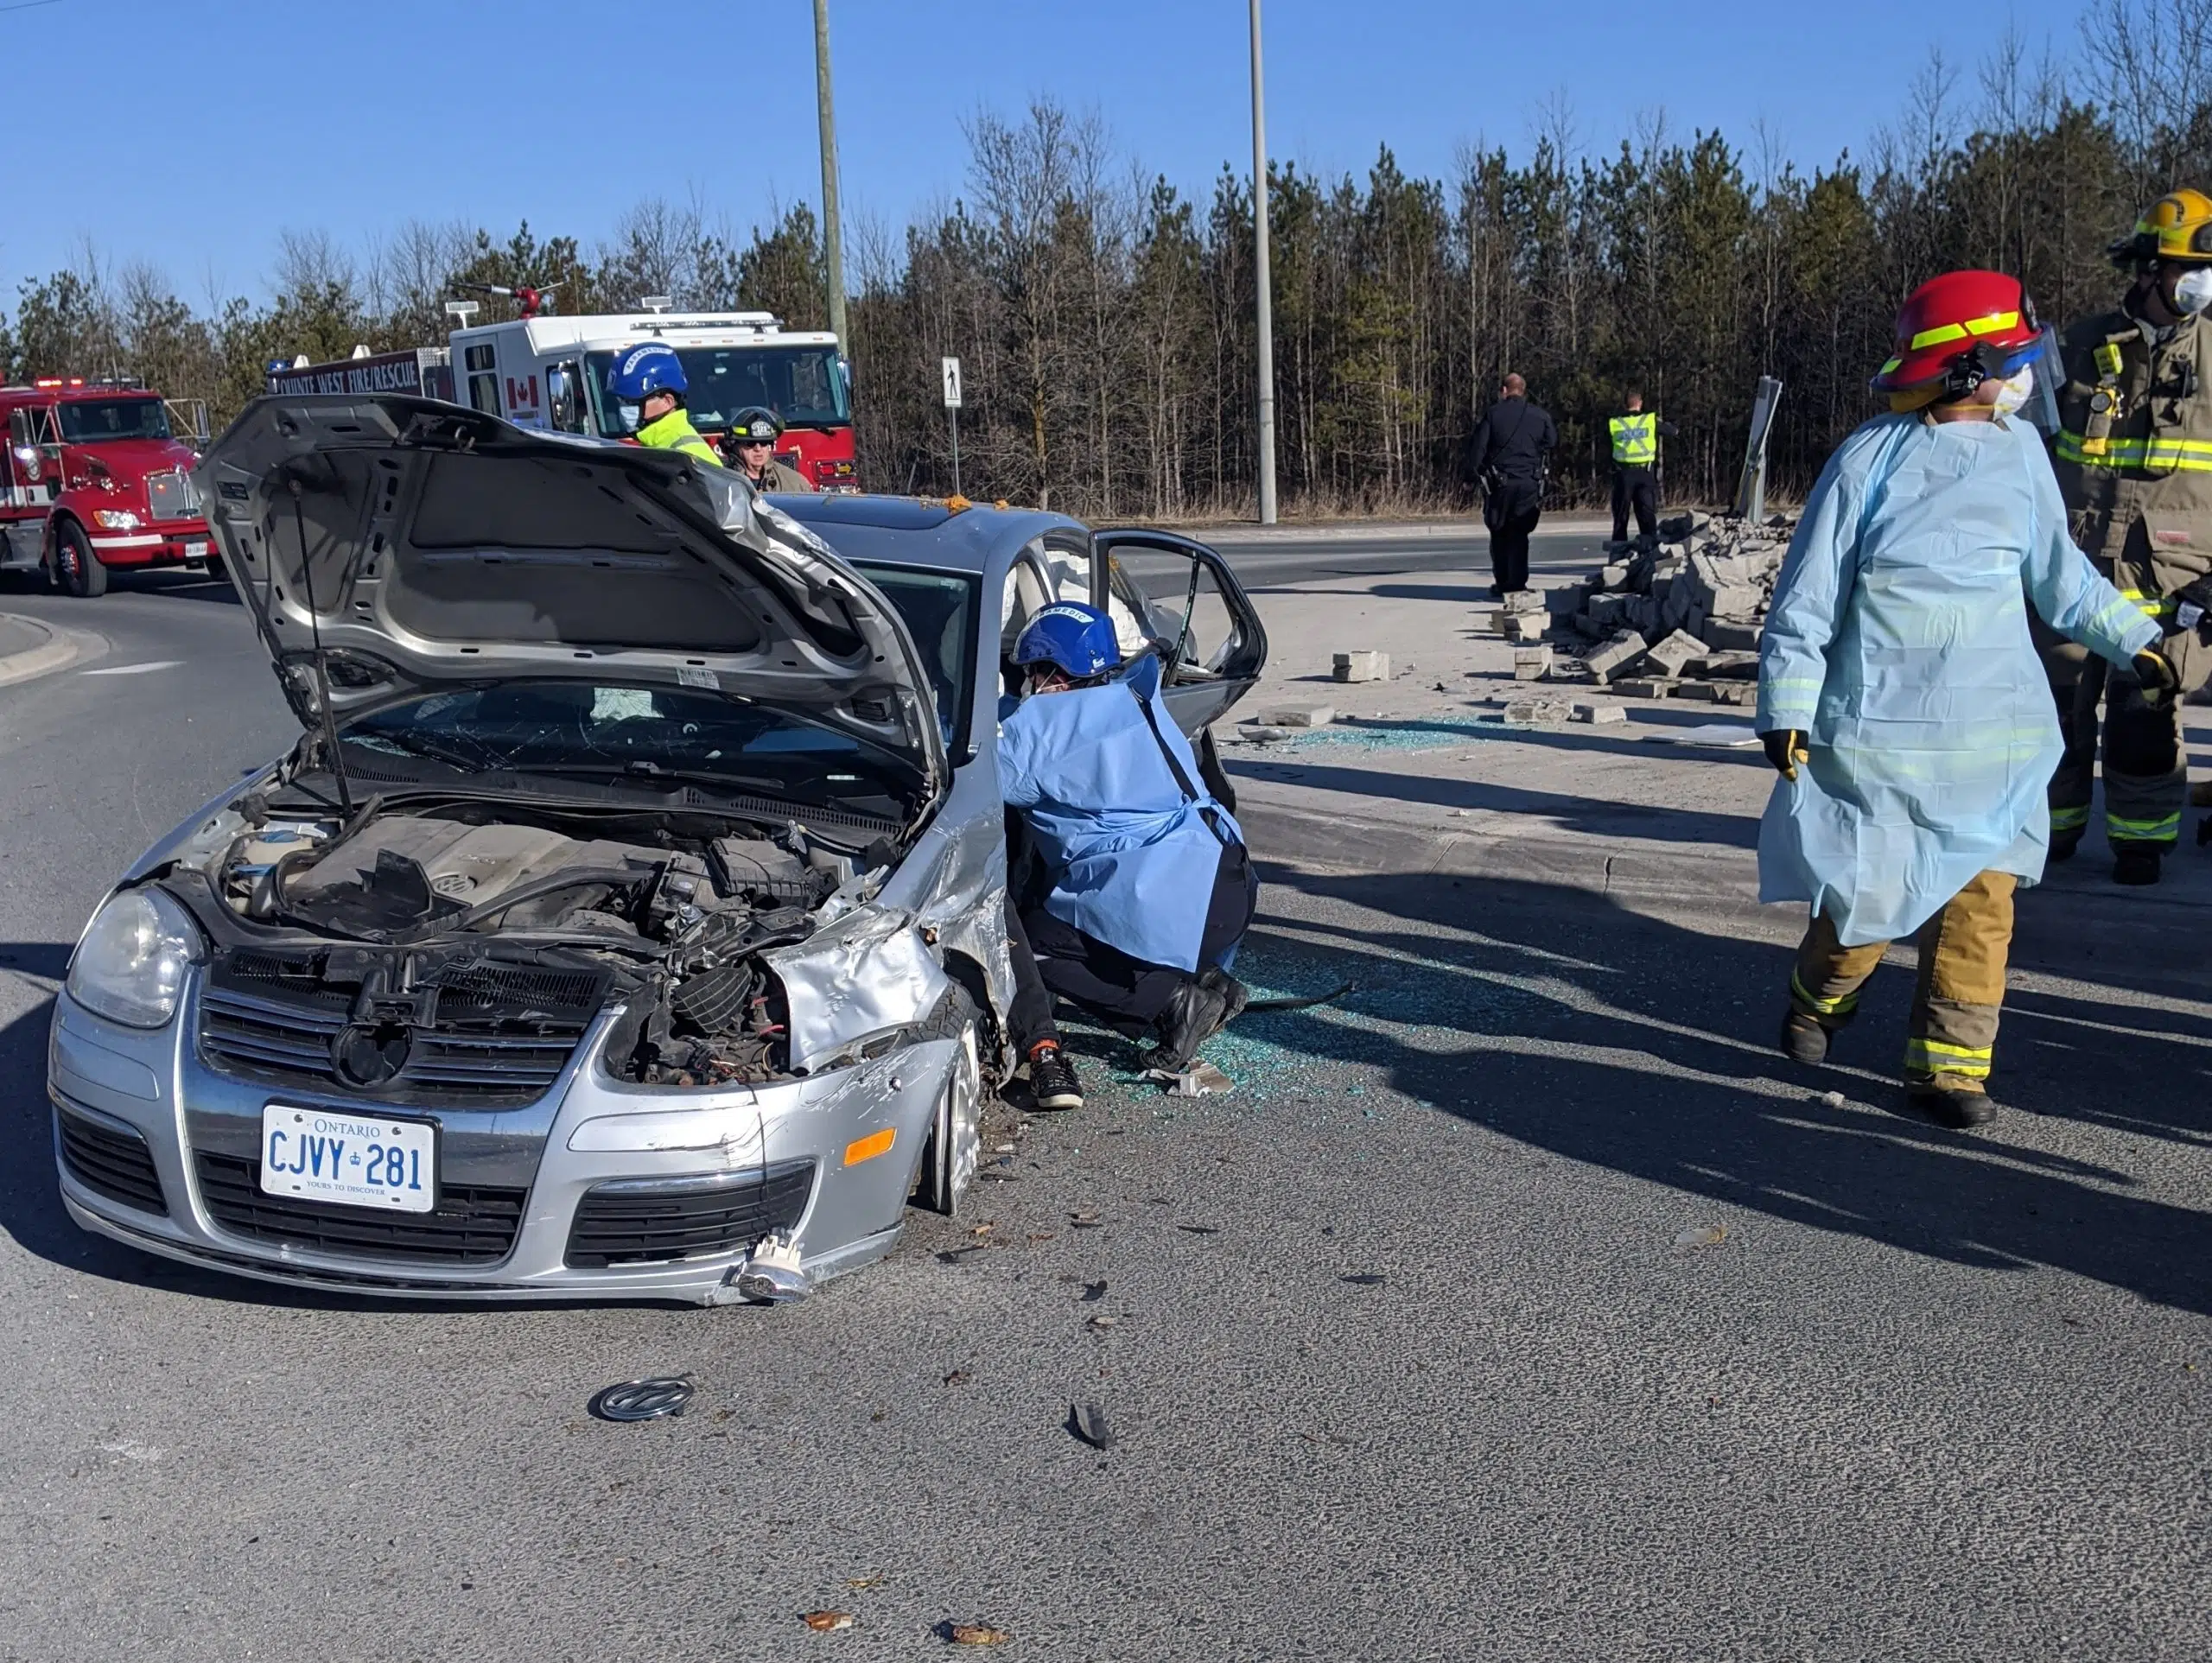 Responders take COVID precautions at crash site Thursday